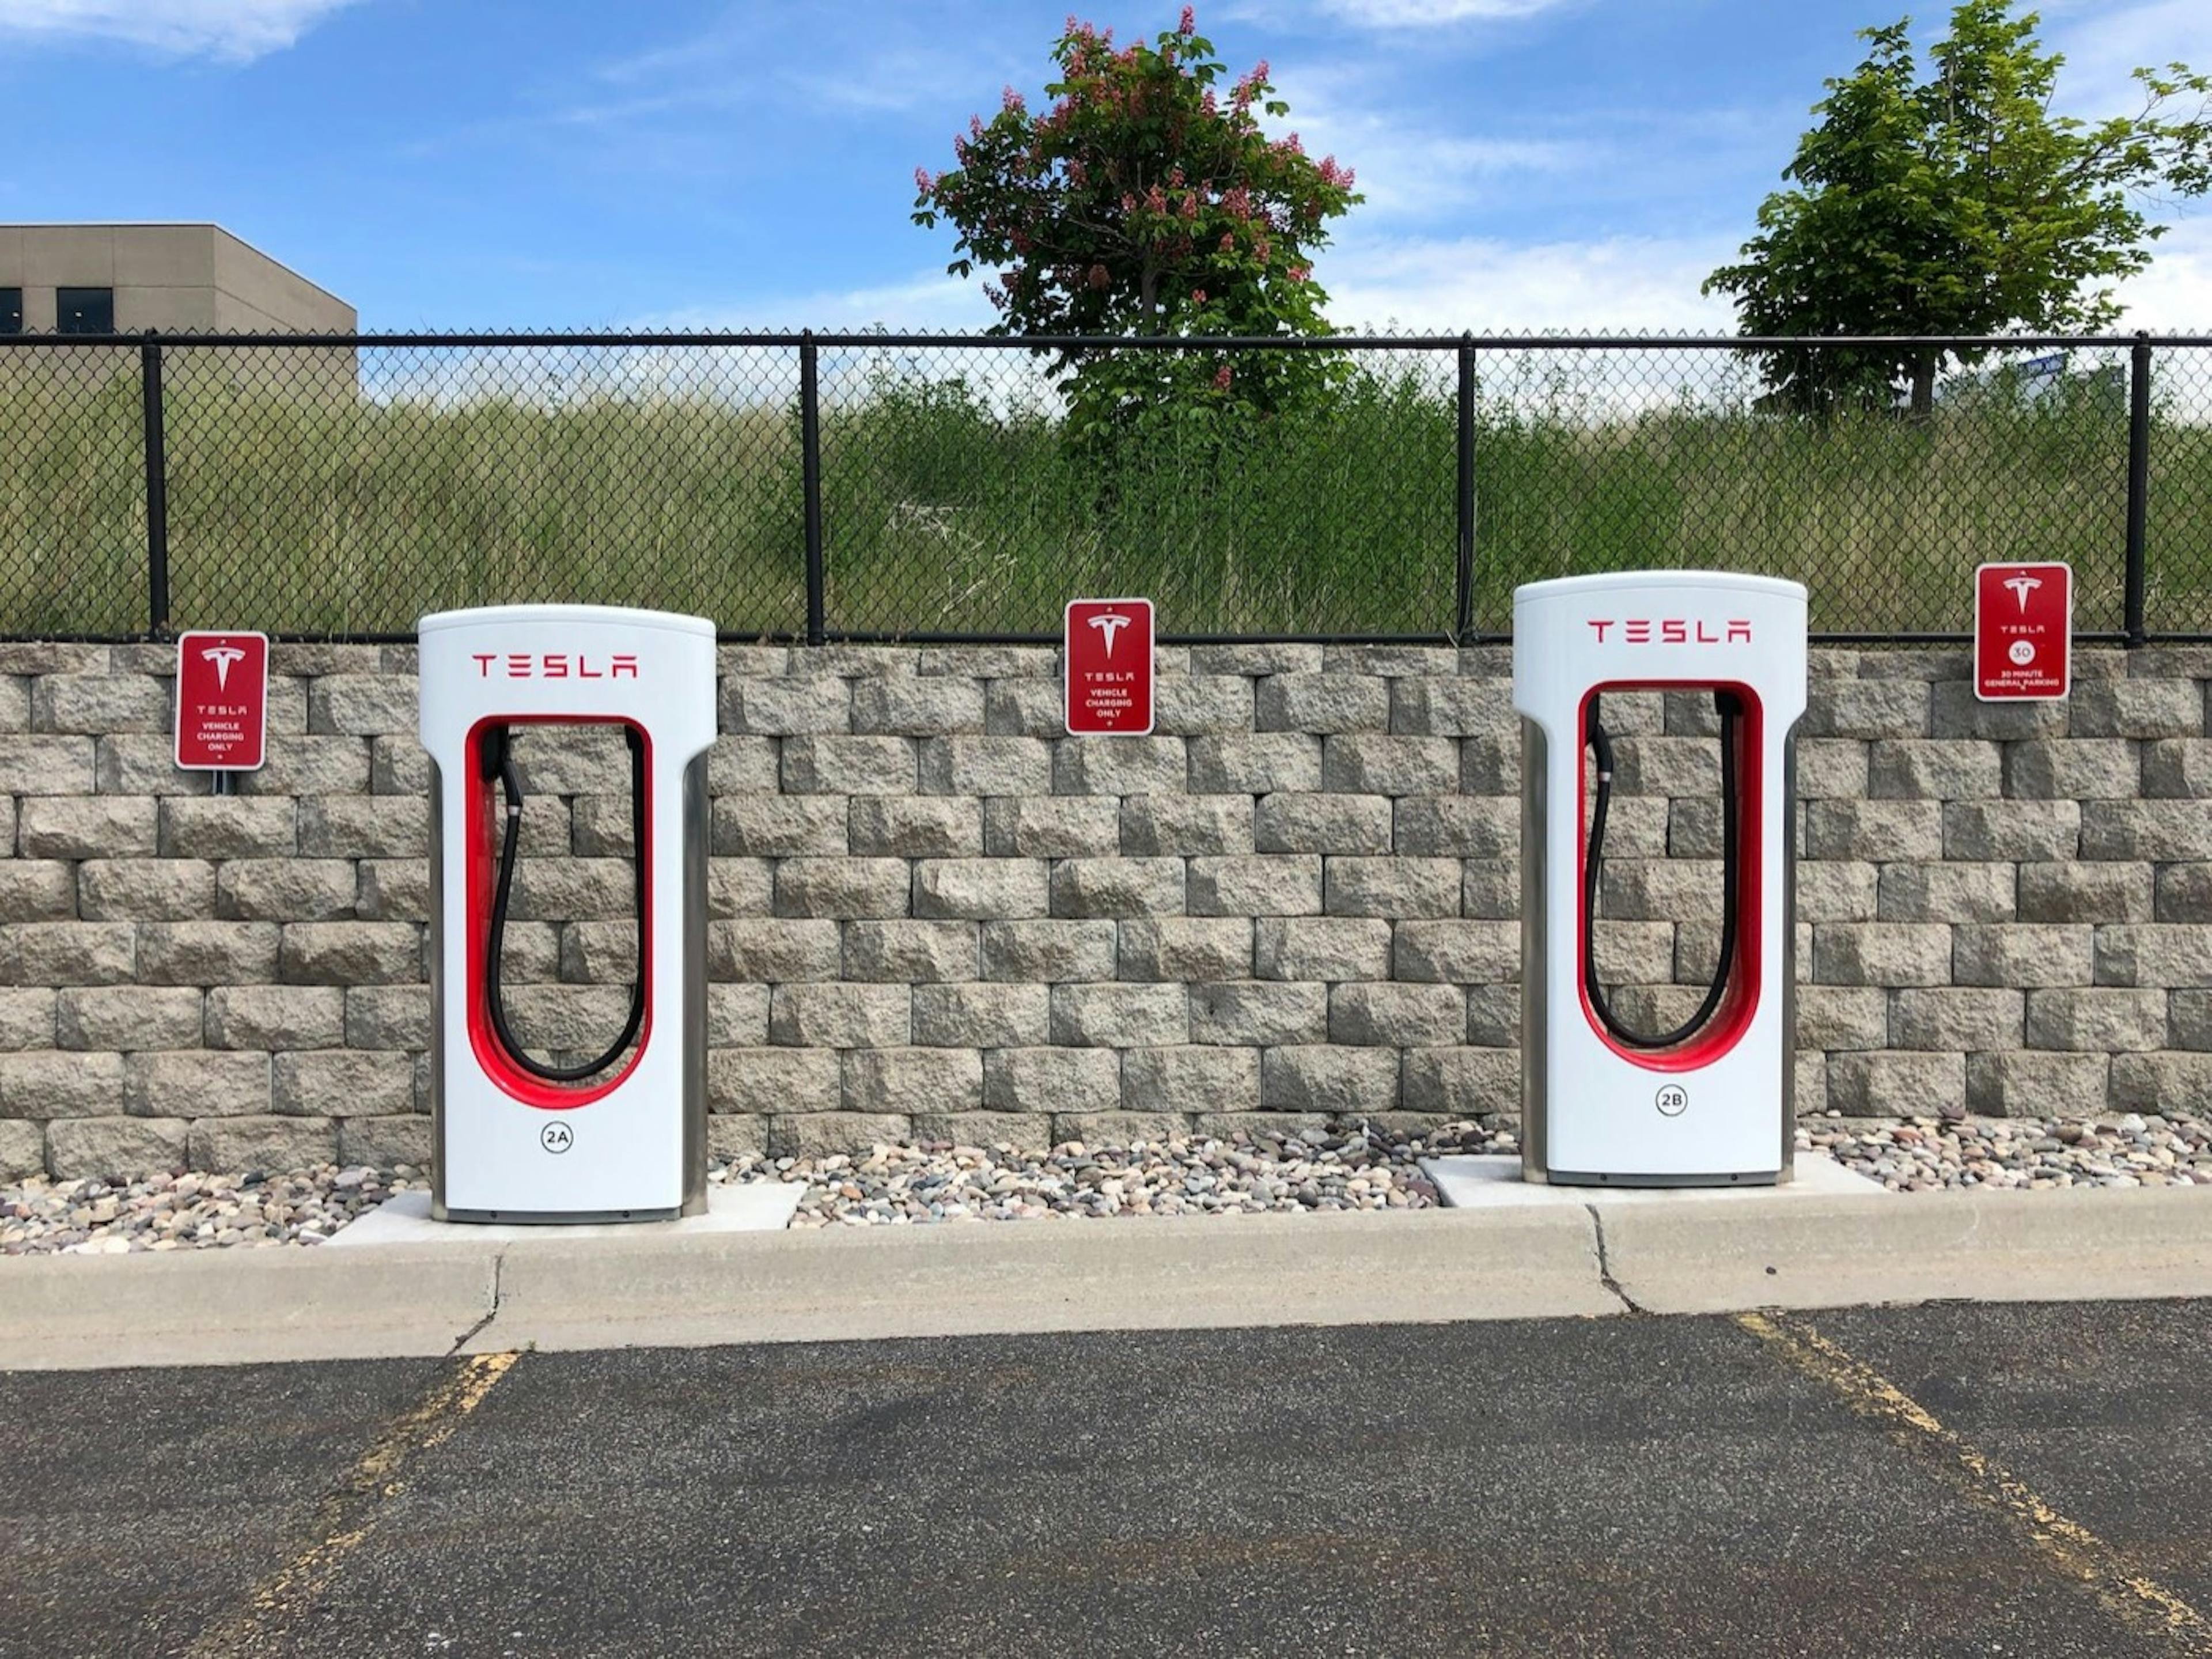 Tesla’s Superchargers Station